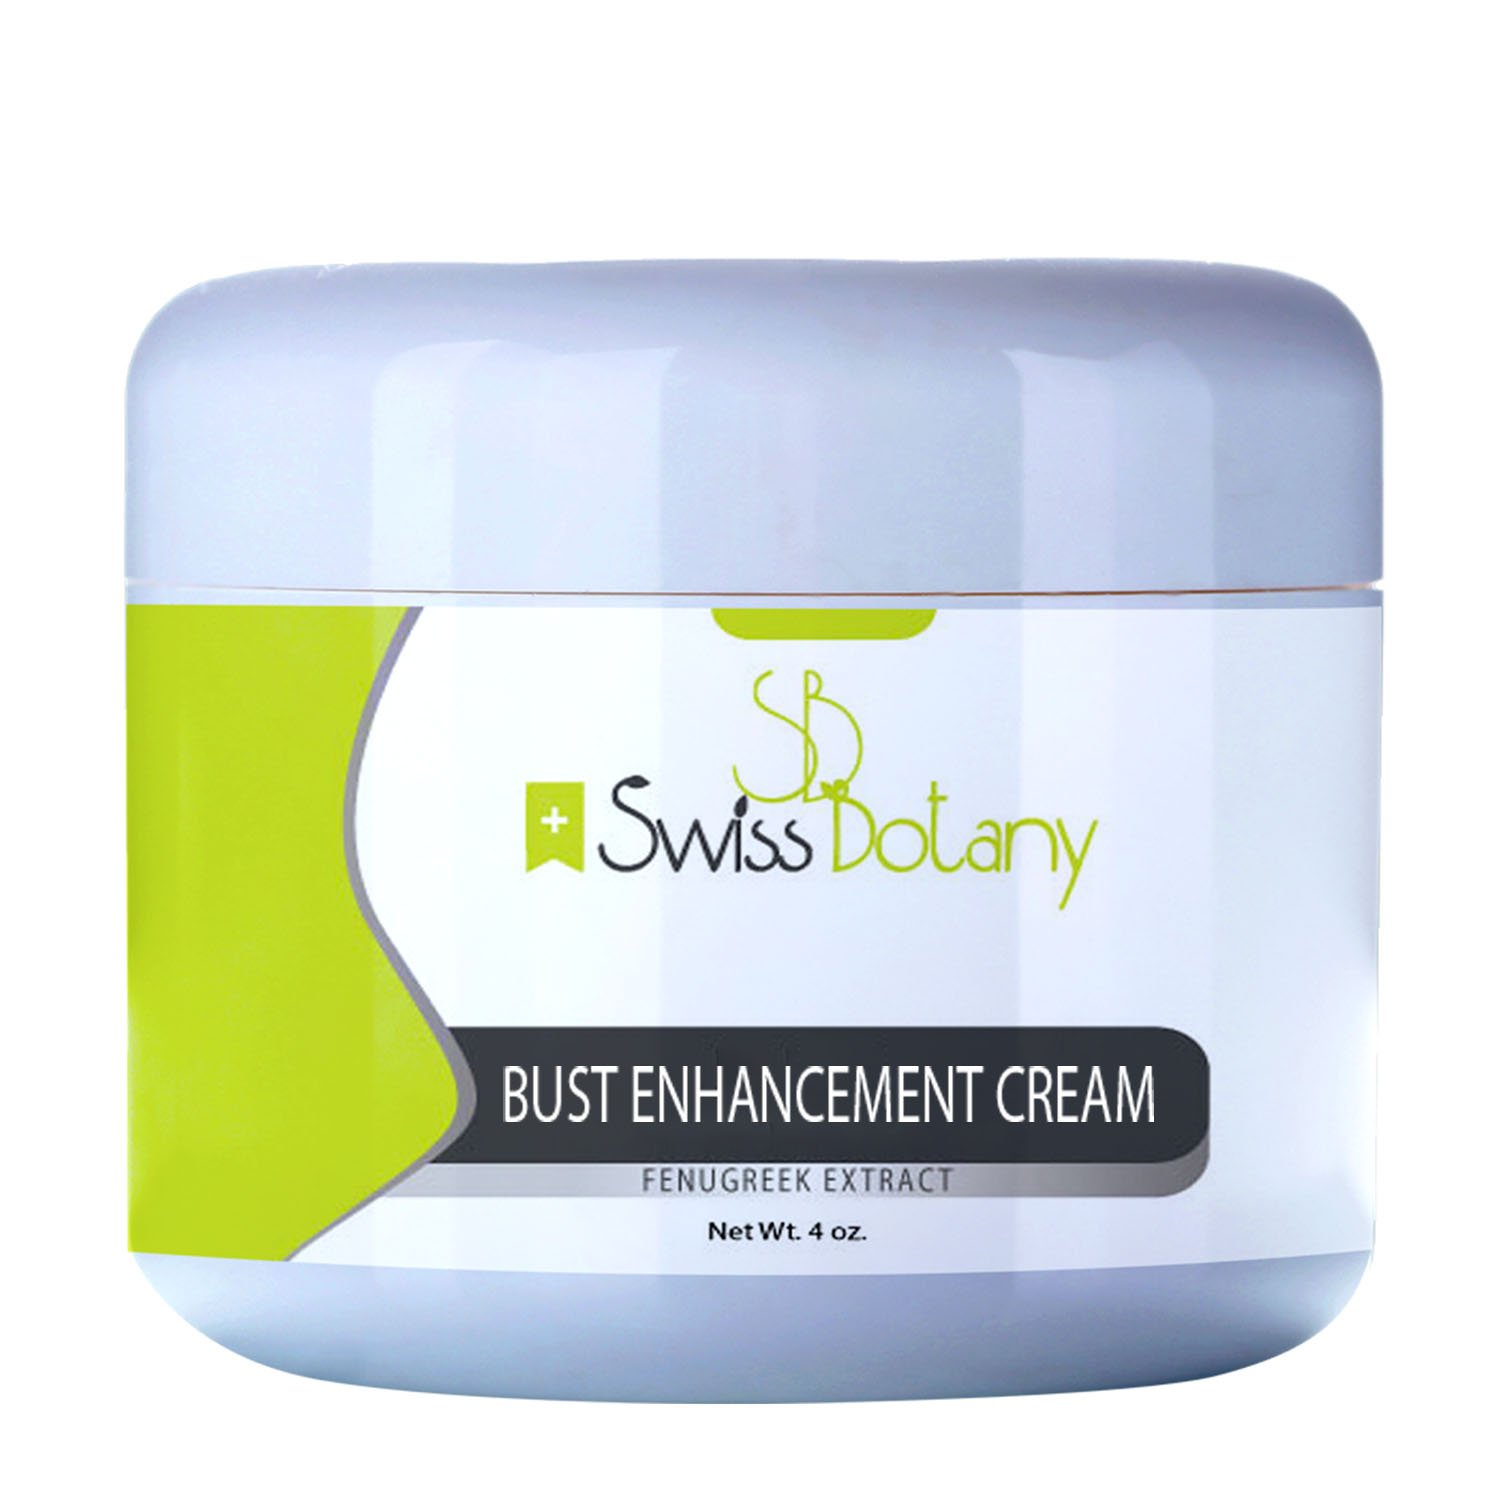  Swiss Botany Breast Enhancement Cream